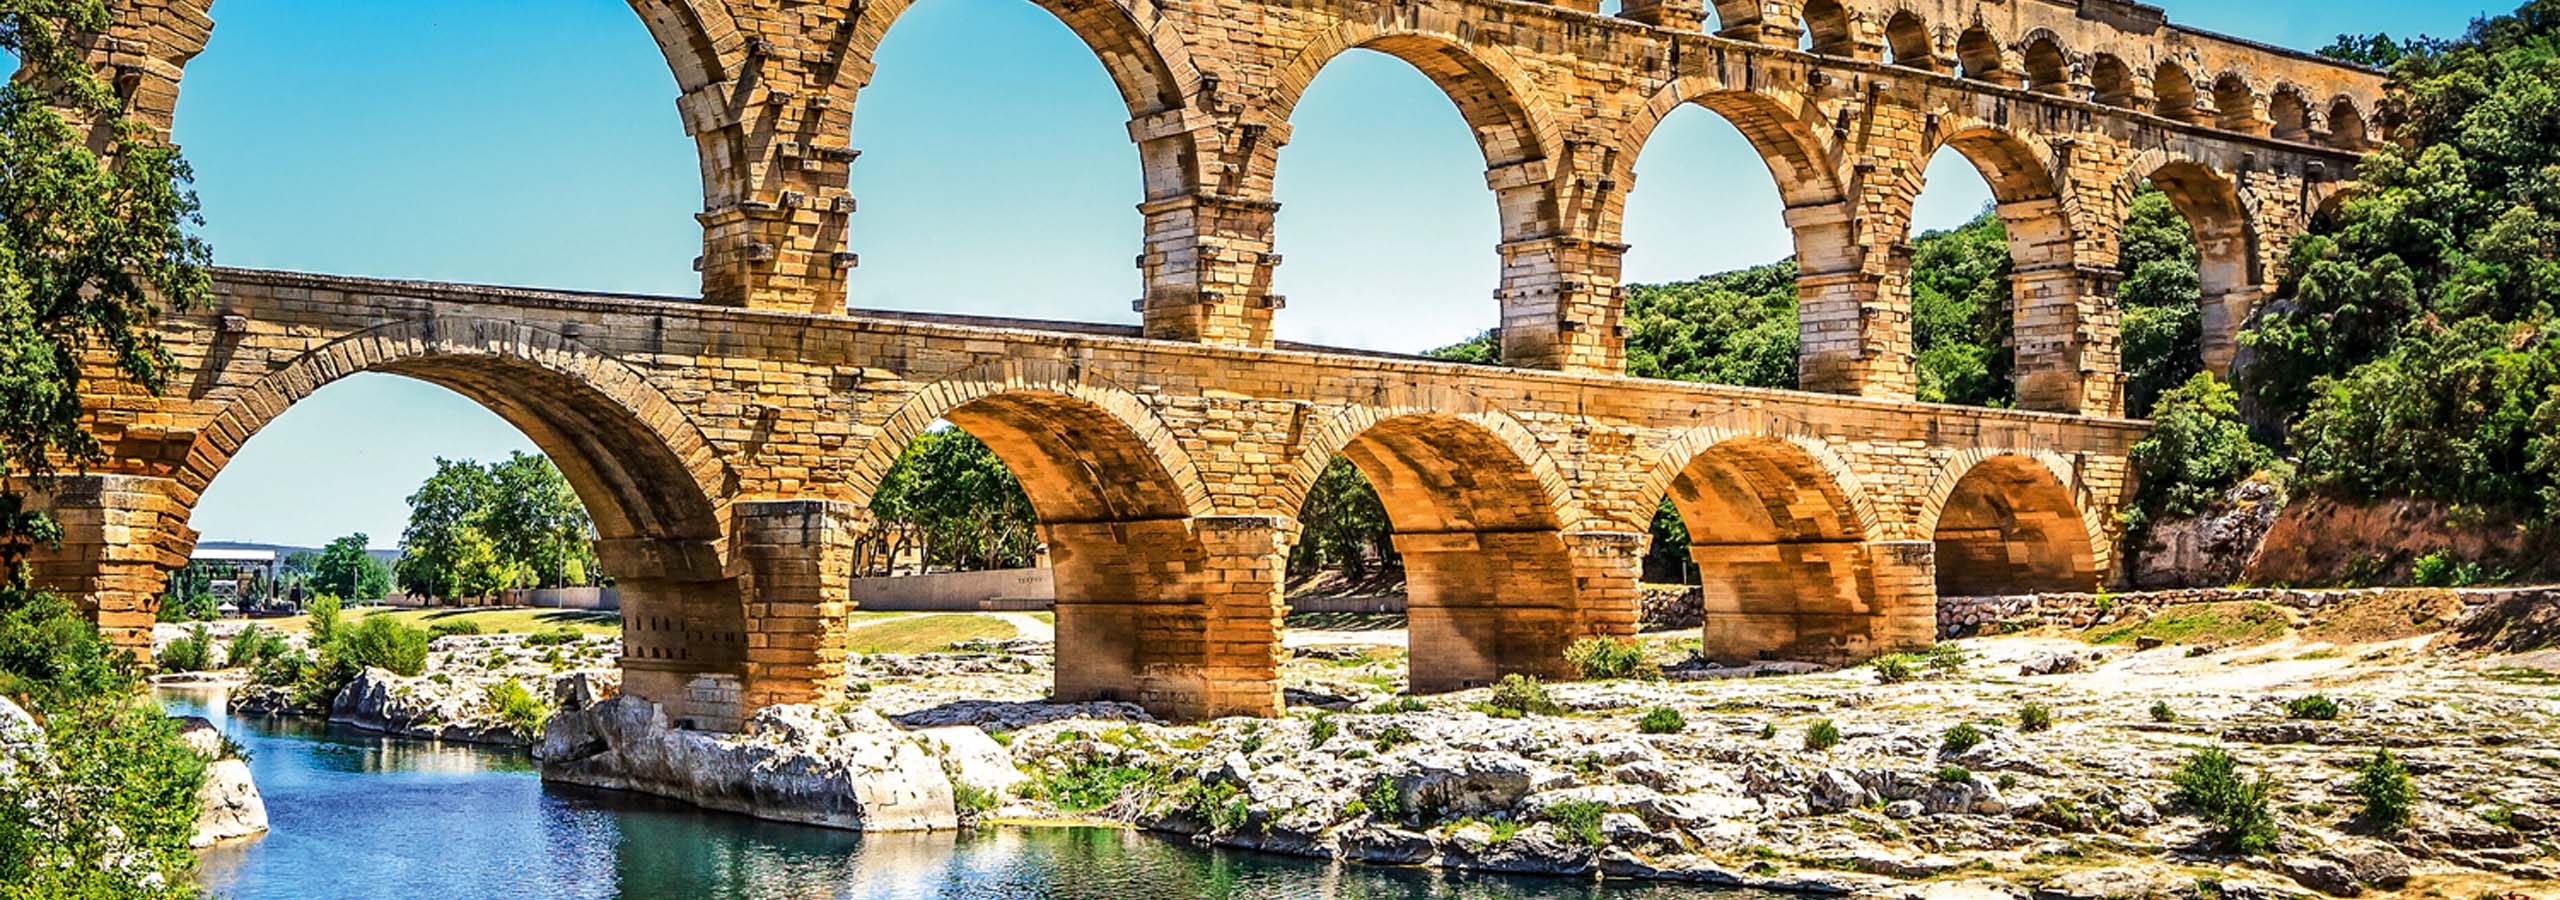 Pont du Gard © Kneissl Touristik | AdobeStock